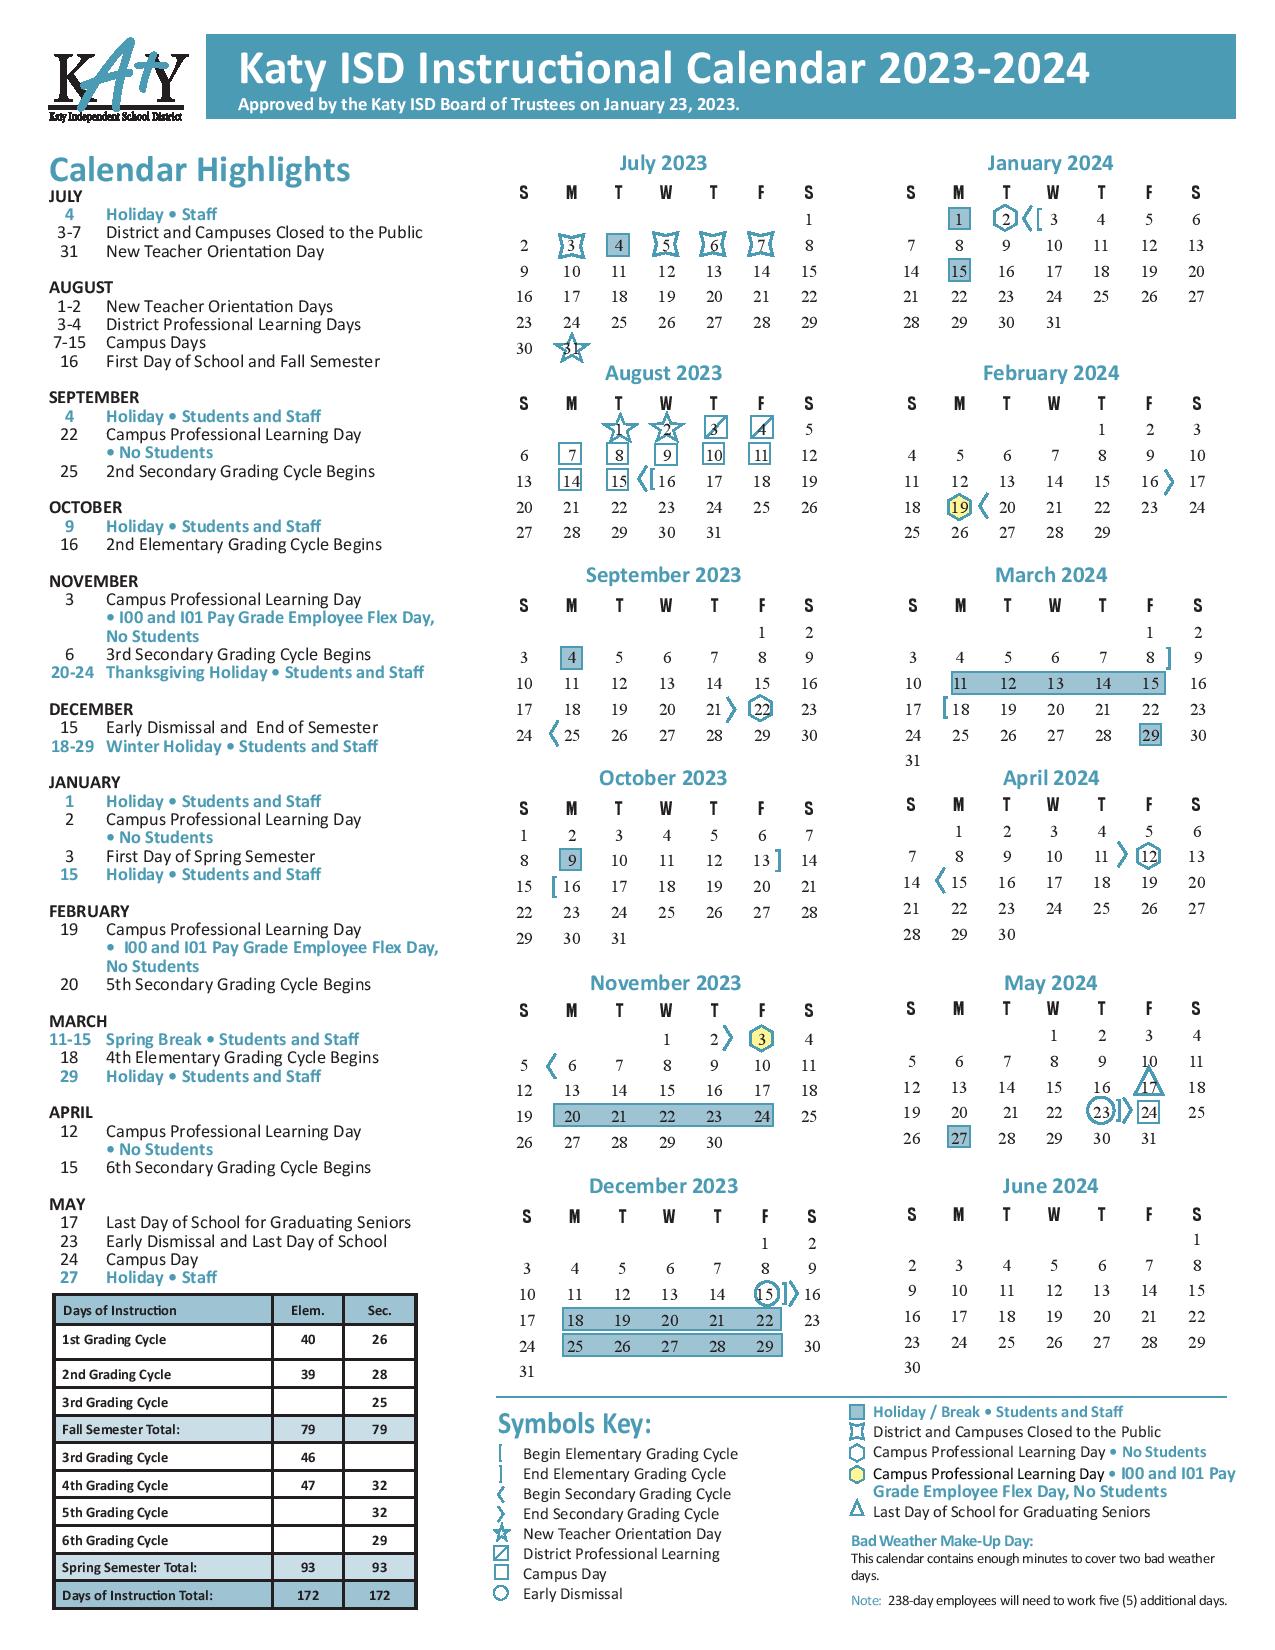 isd-independence-2024-2025-calendar-dael-fleurette